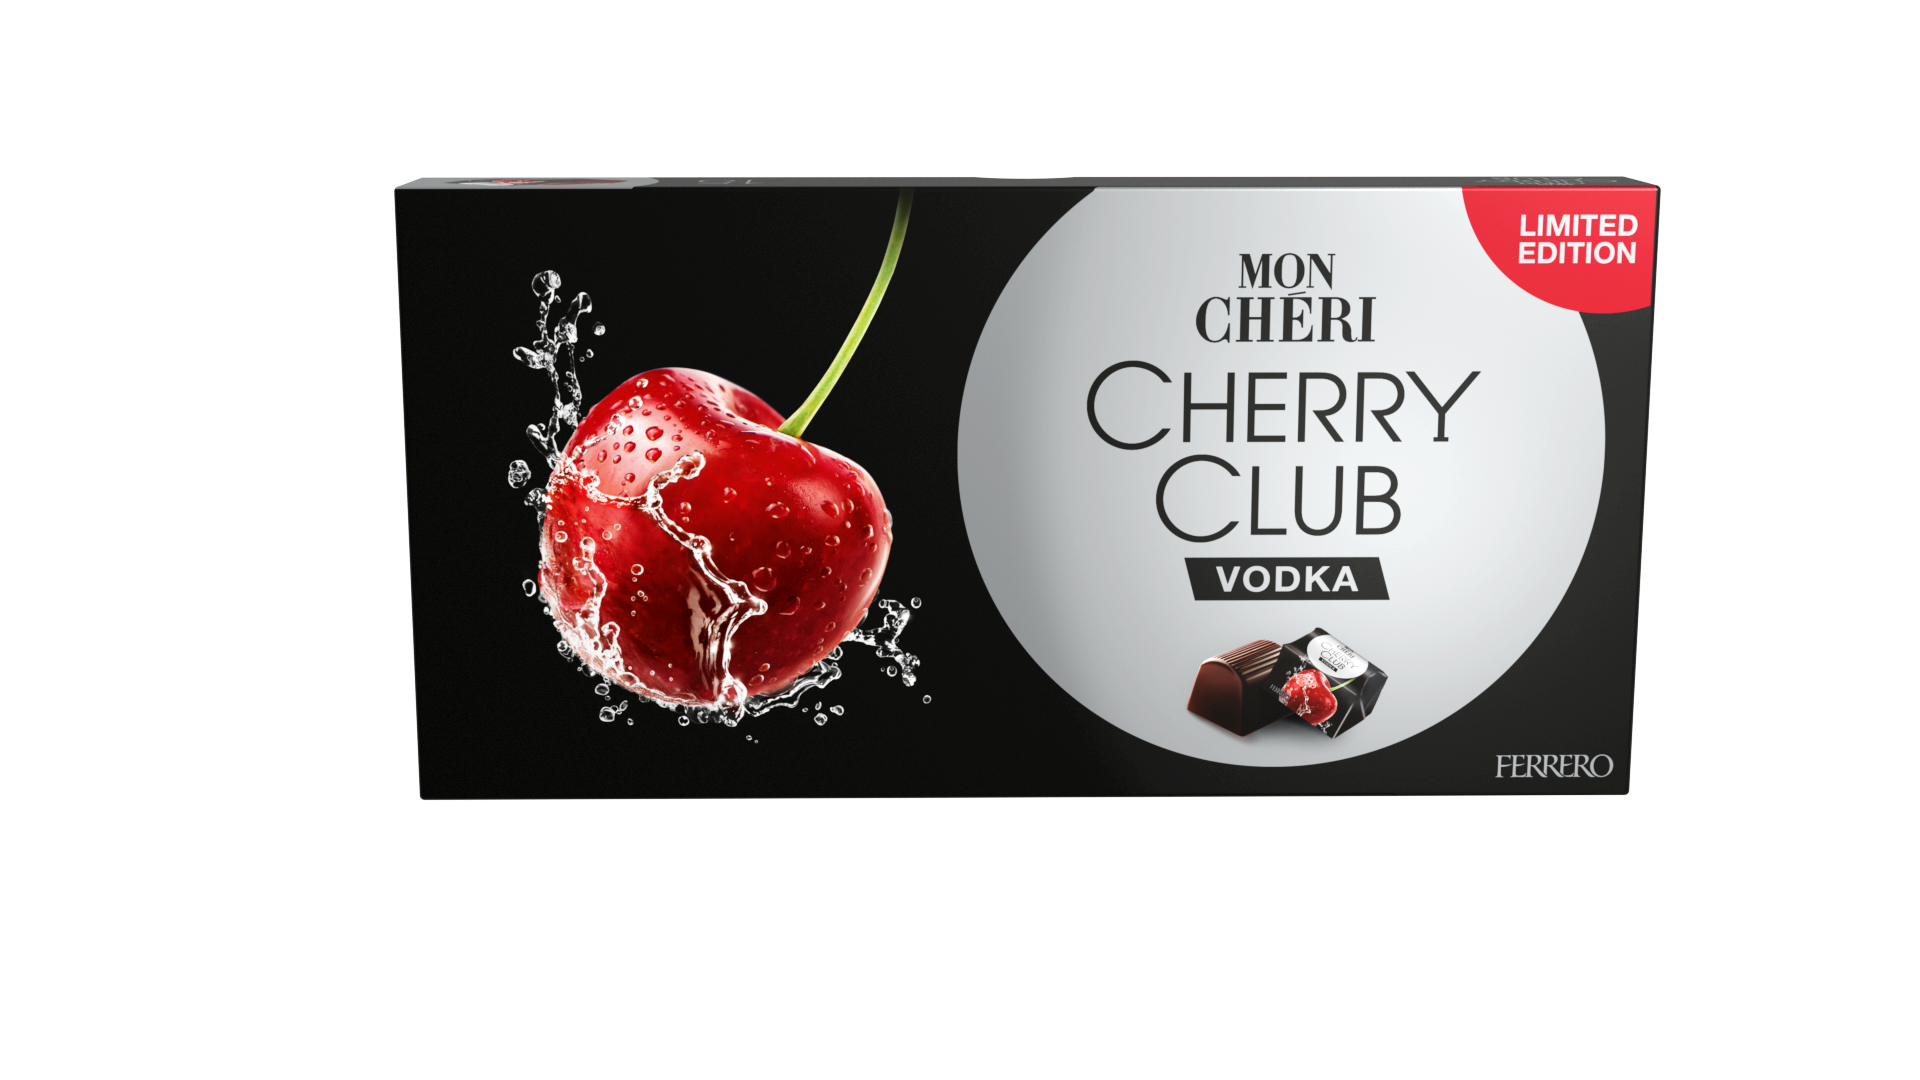 Mon Chéri Cherry Club Vodka, in limited edition